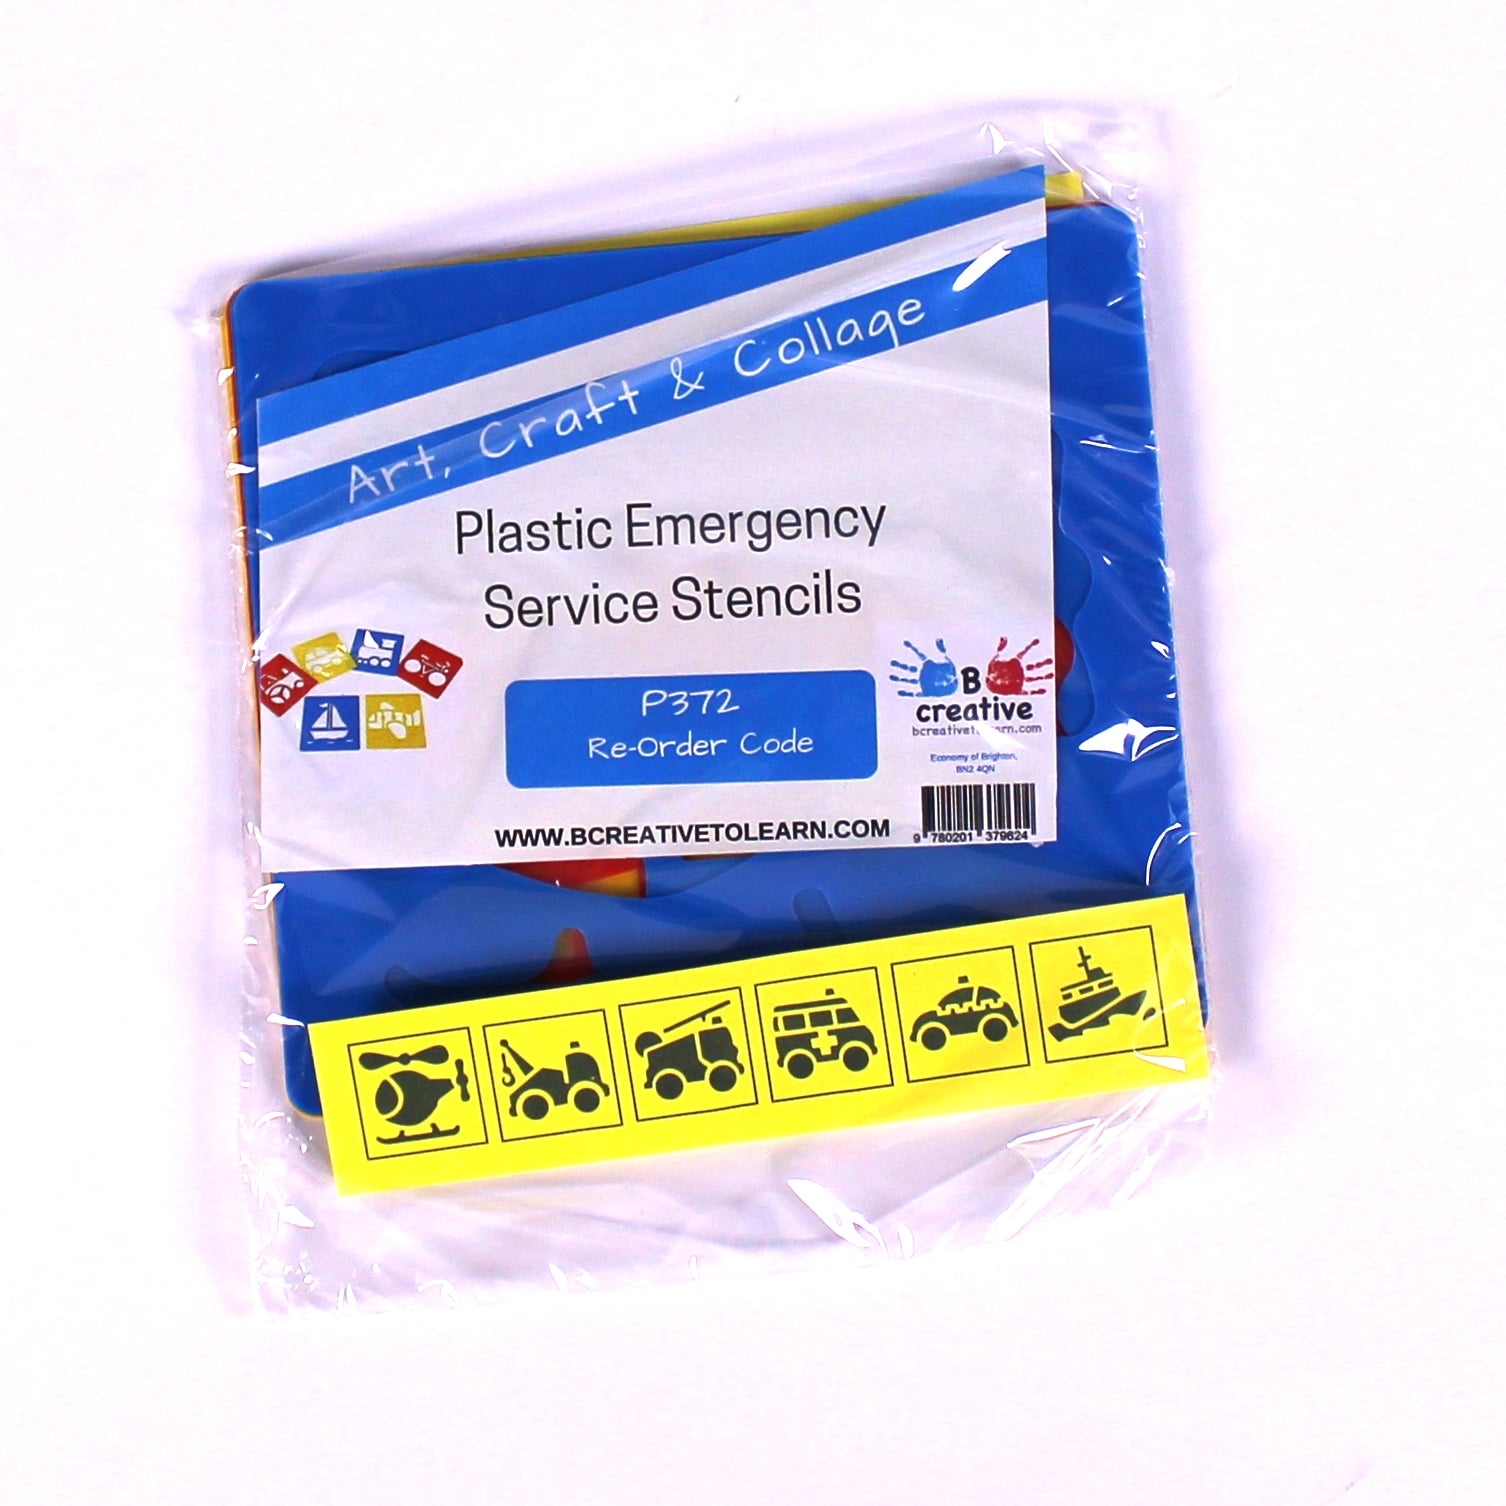 Plastic Emergency Service Stencils